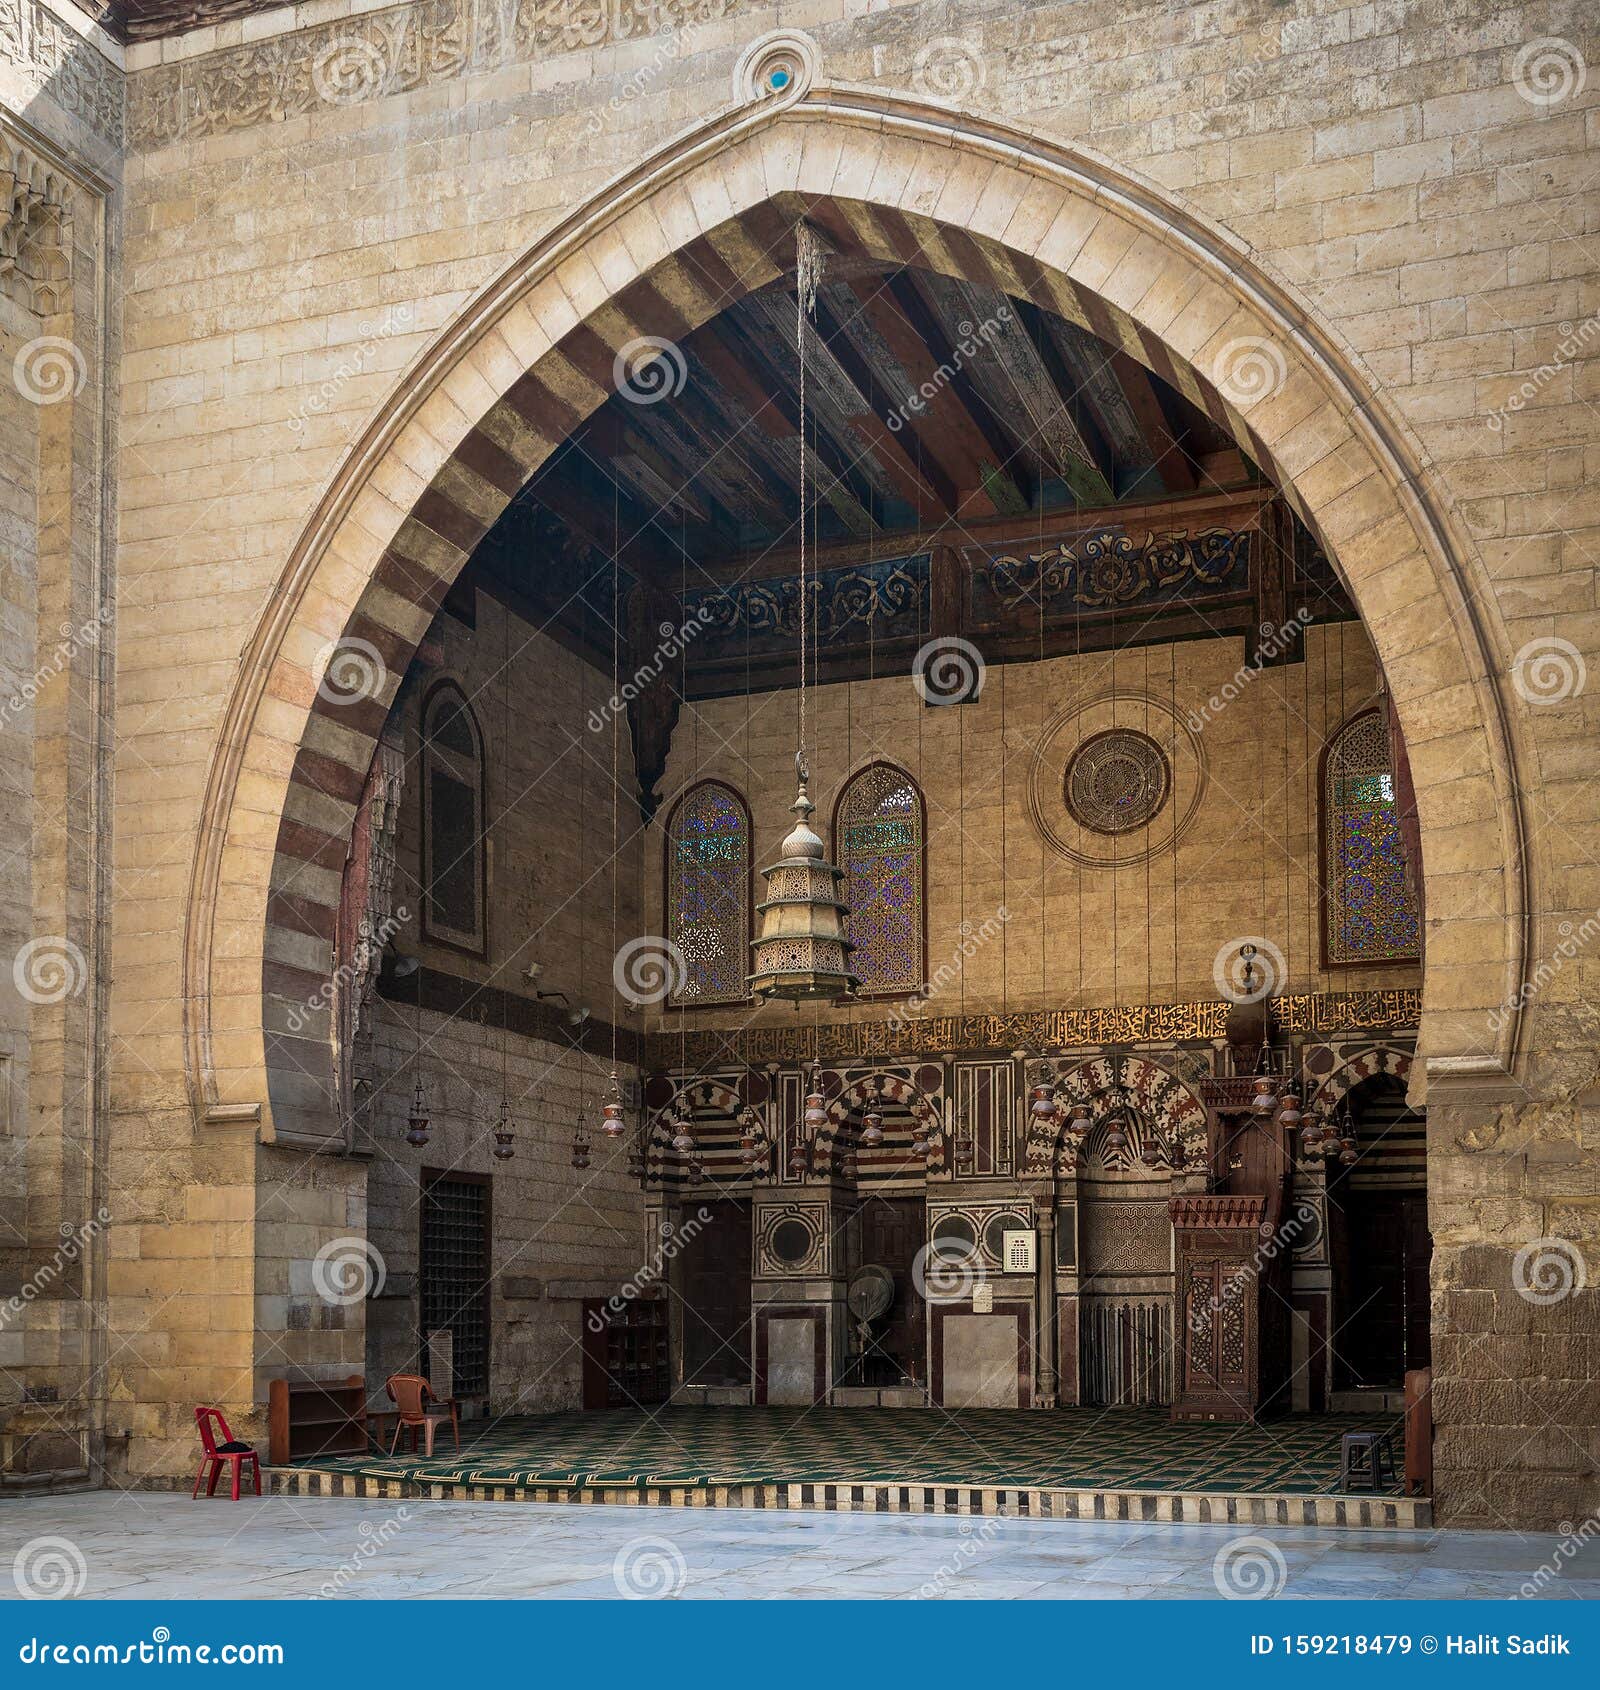 main iwan - arch - at the courtyard of historic mamluk era mosque of al ashraf barsbay, cairo, egypt